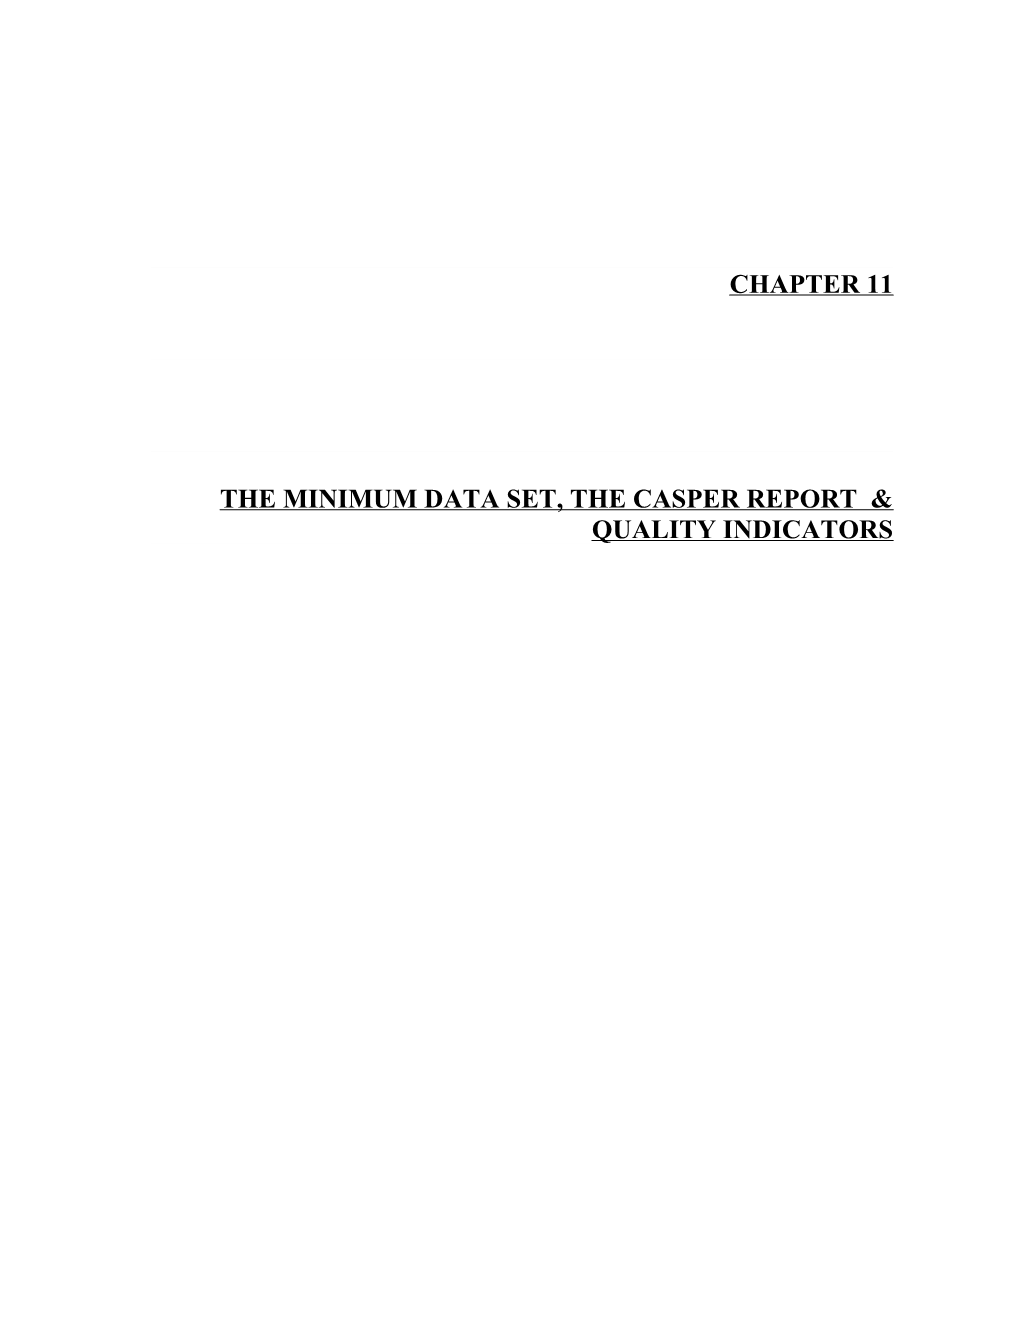 The Minimum Data Set, the Casper Report & Quality Indicators